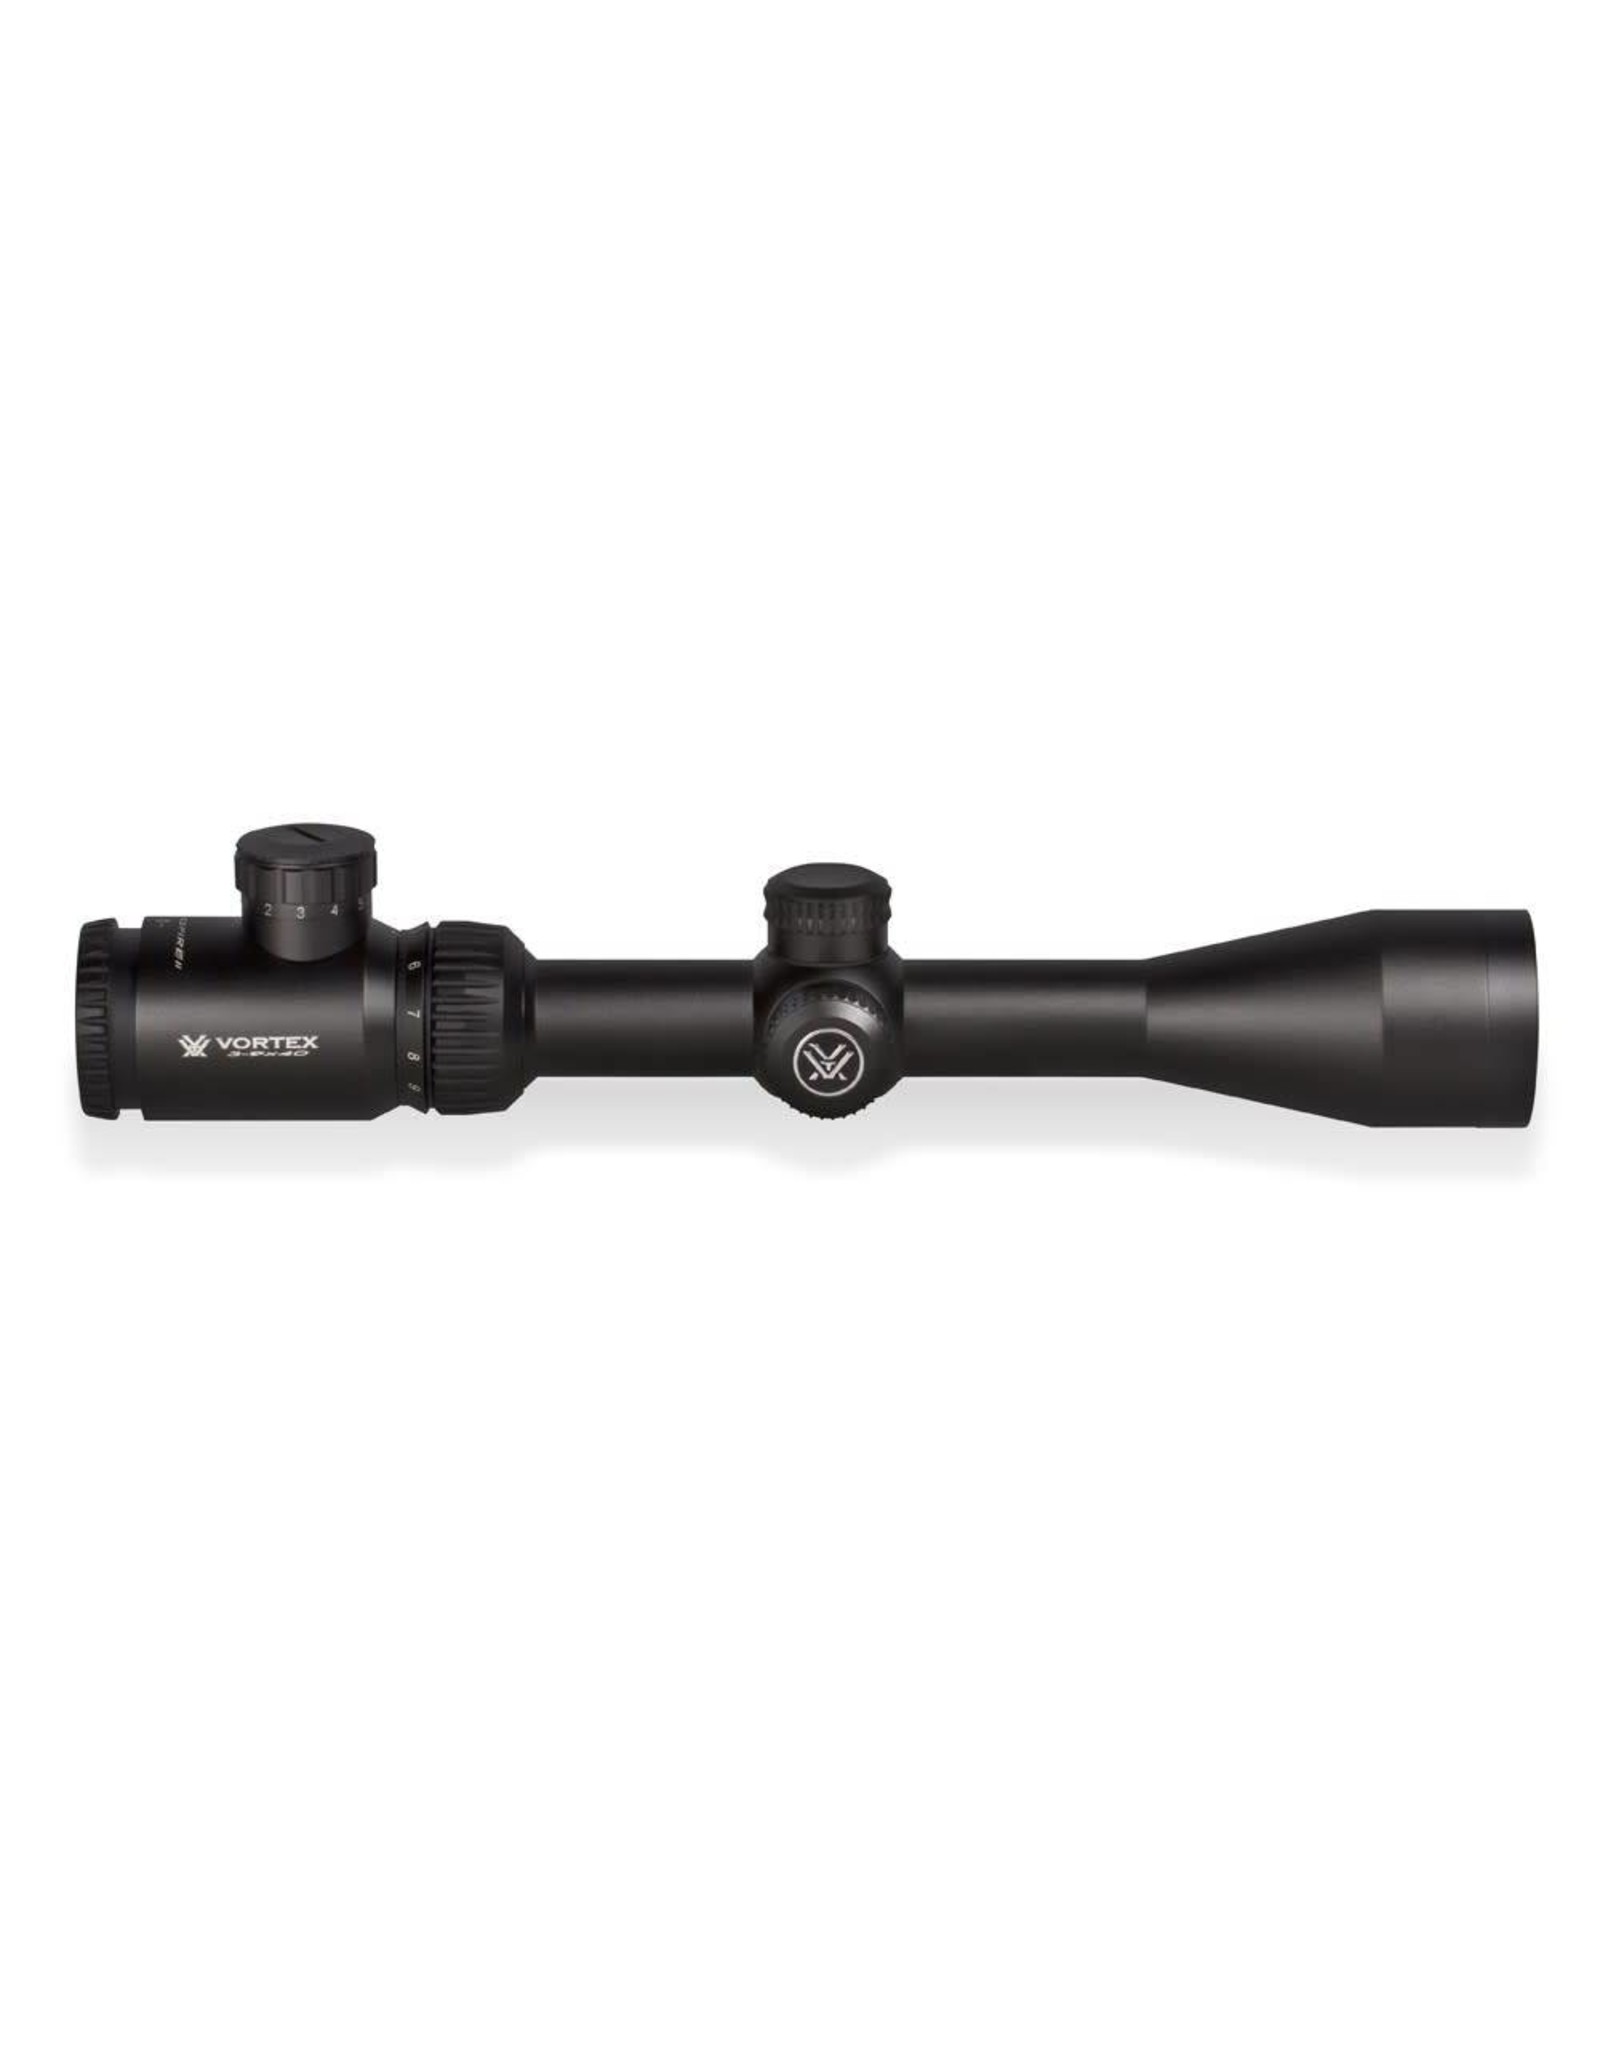 Vortex Crossfire Ii 3 9x40mm Riflescope With V Brite Illuminated